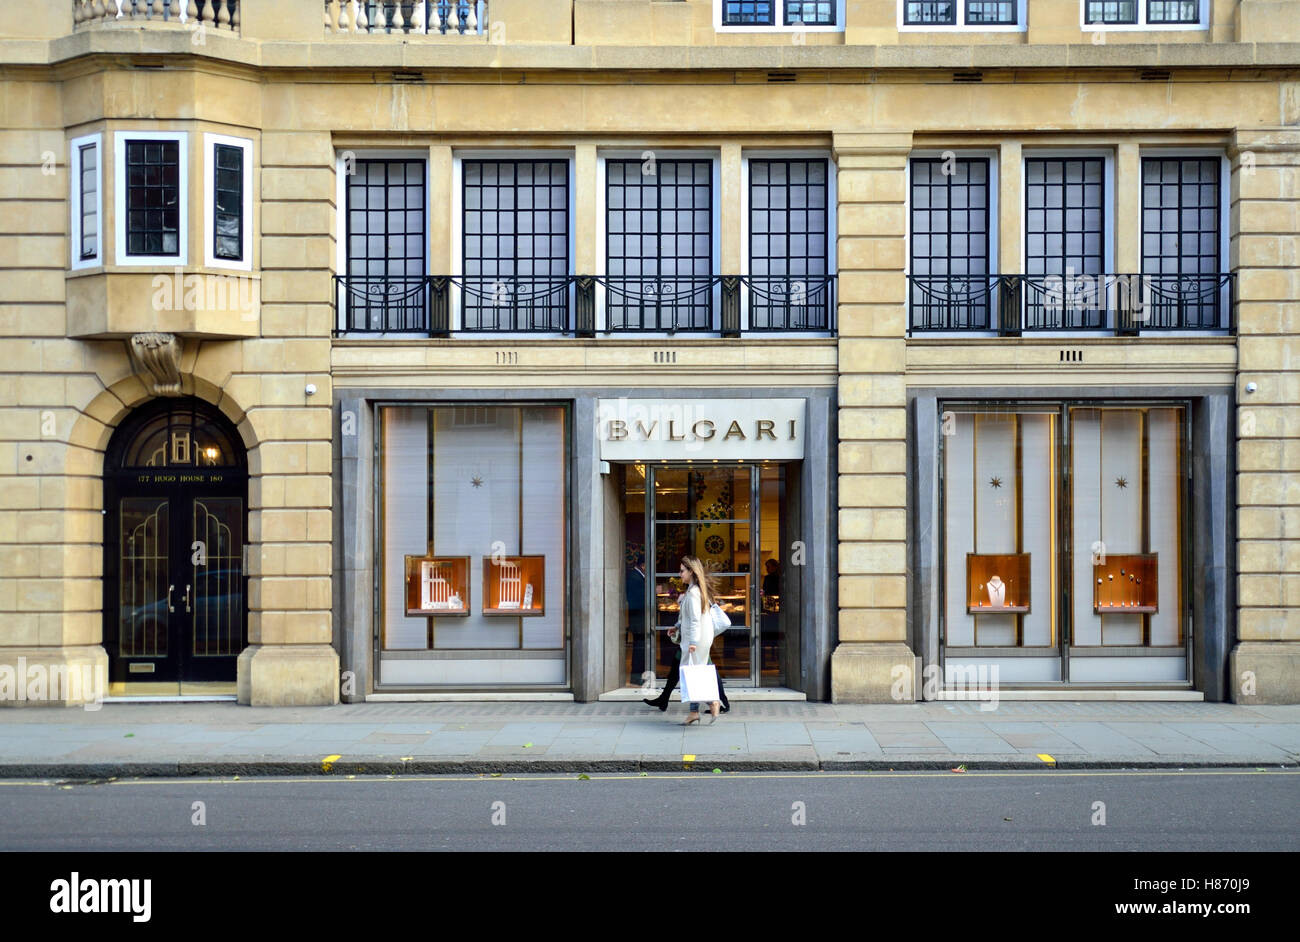 London, England, UK. Sloane Street - Bulgari shopfront Stock Photo - Alamy